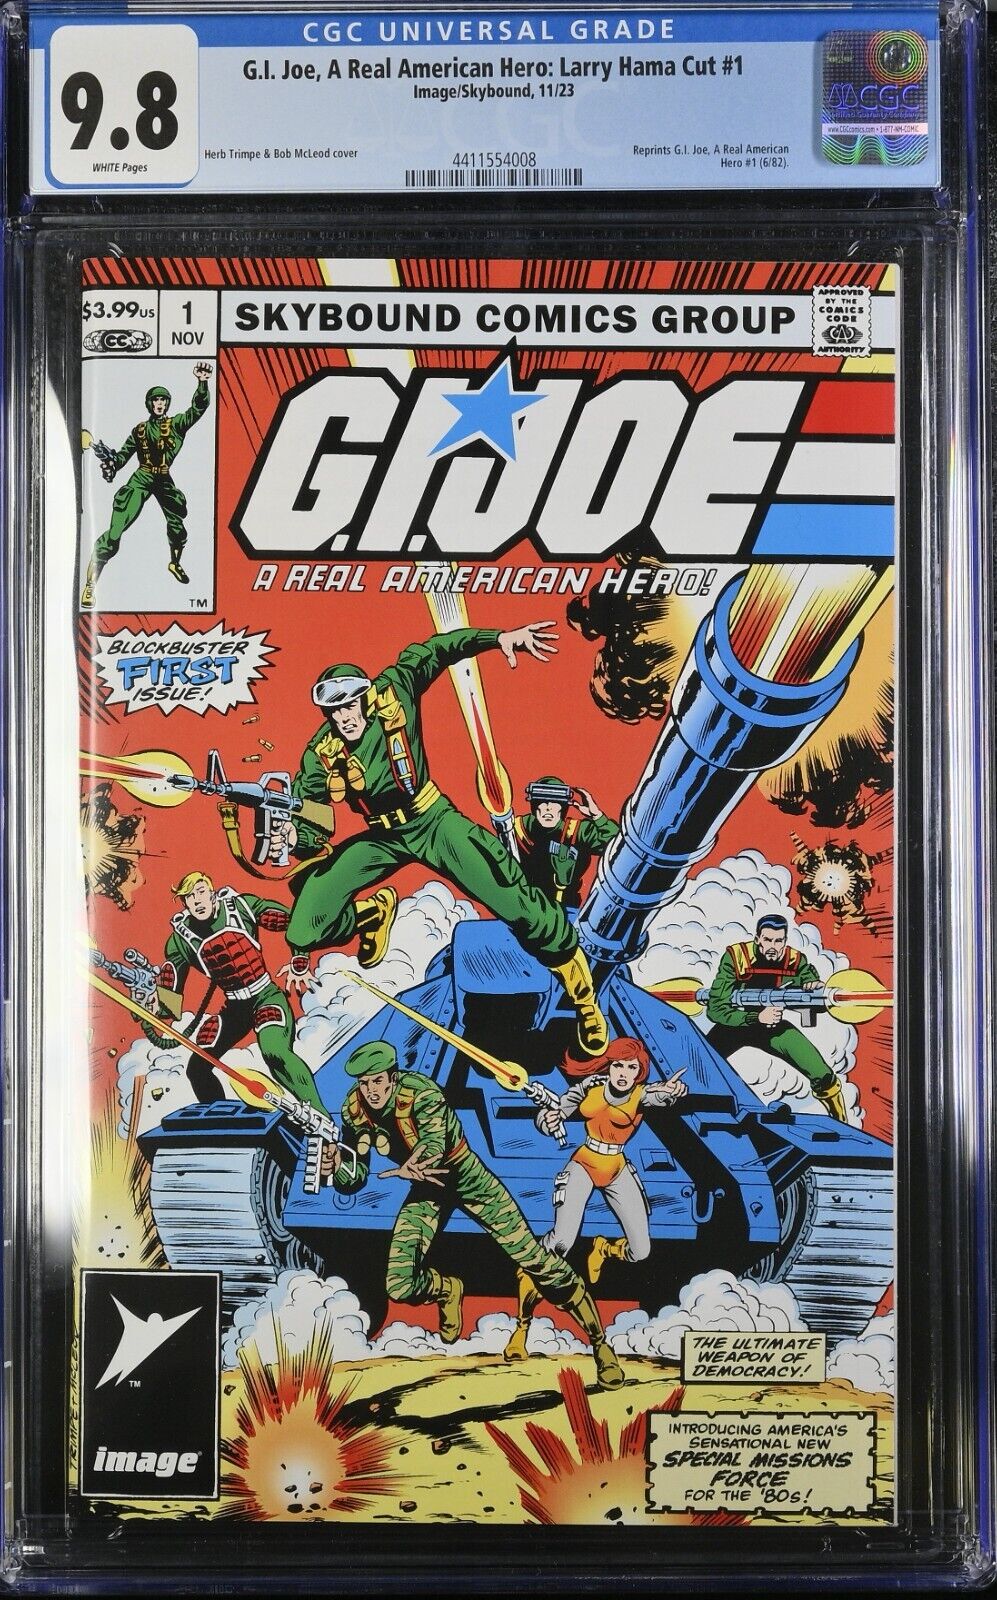 G.I. Joe #1 Larry Hama Cut Variant CGC 9.8 Image Comics 2023